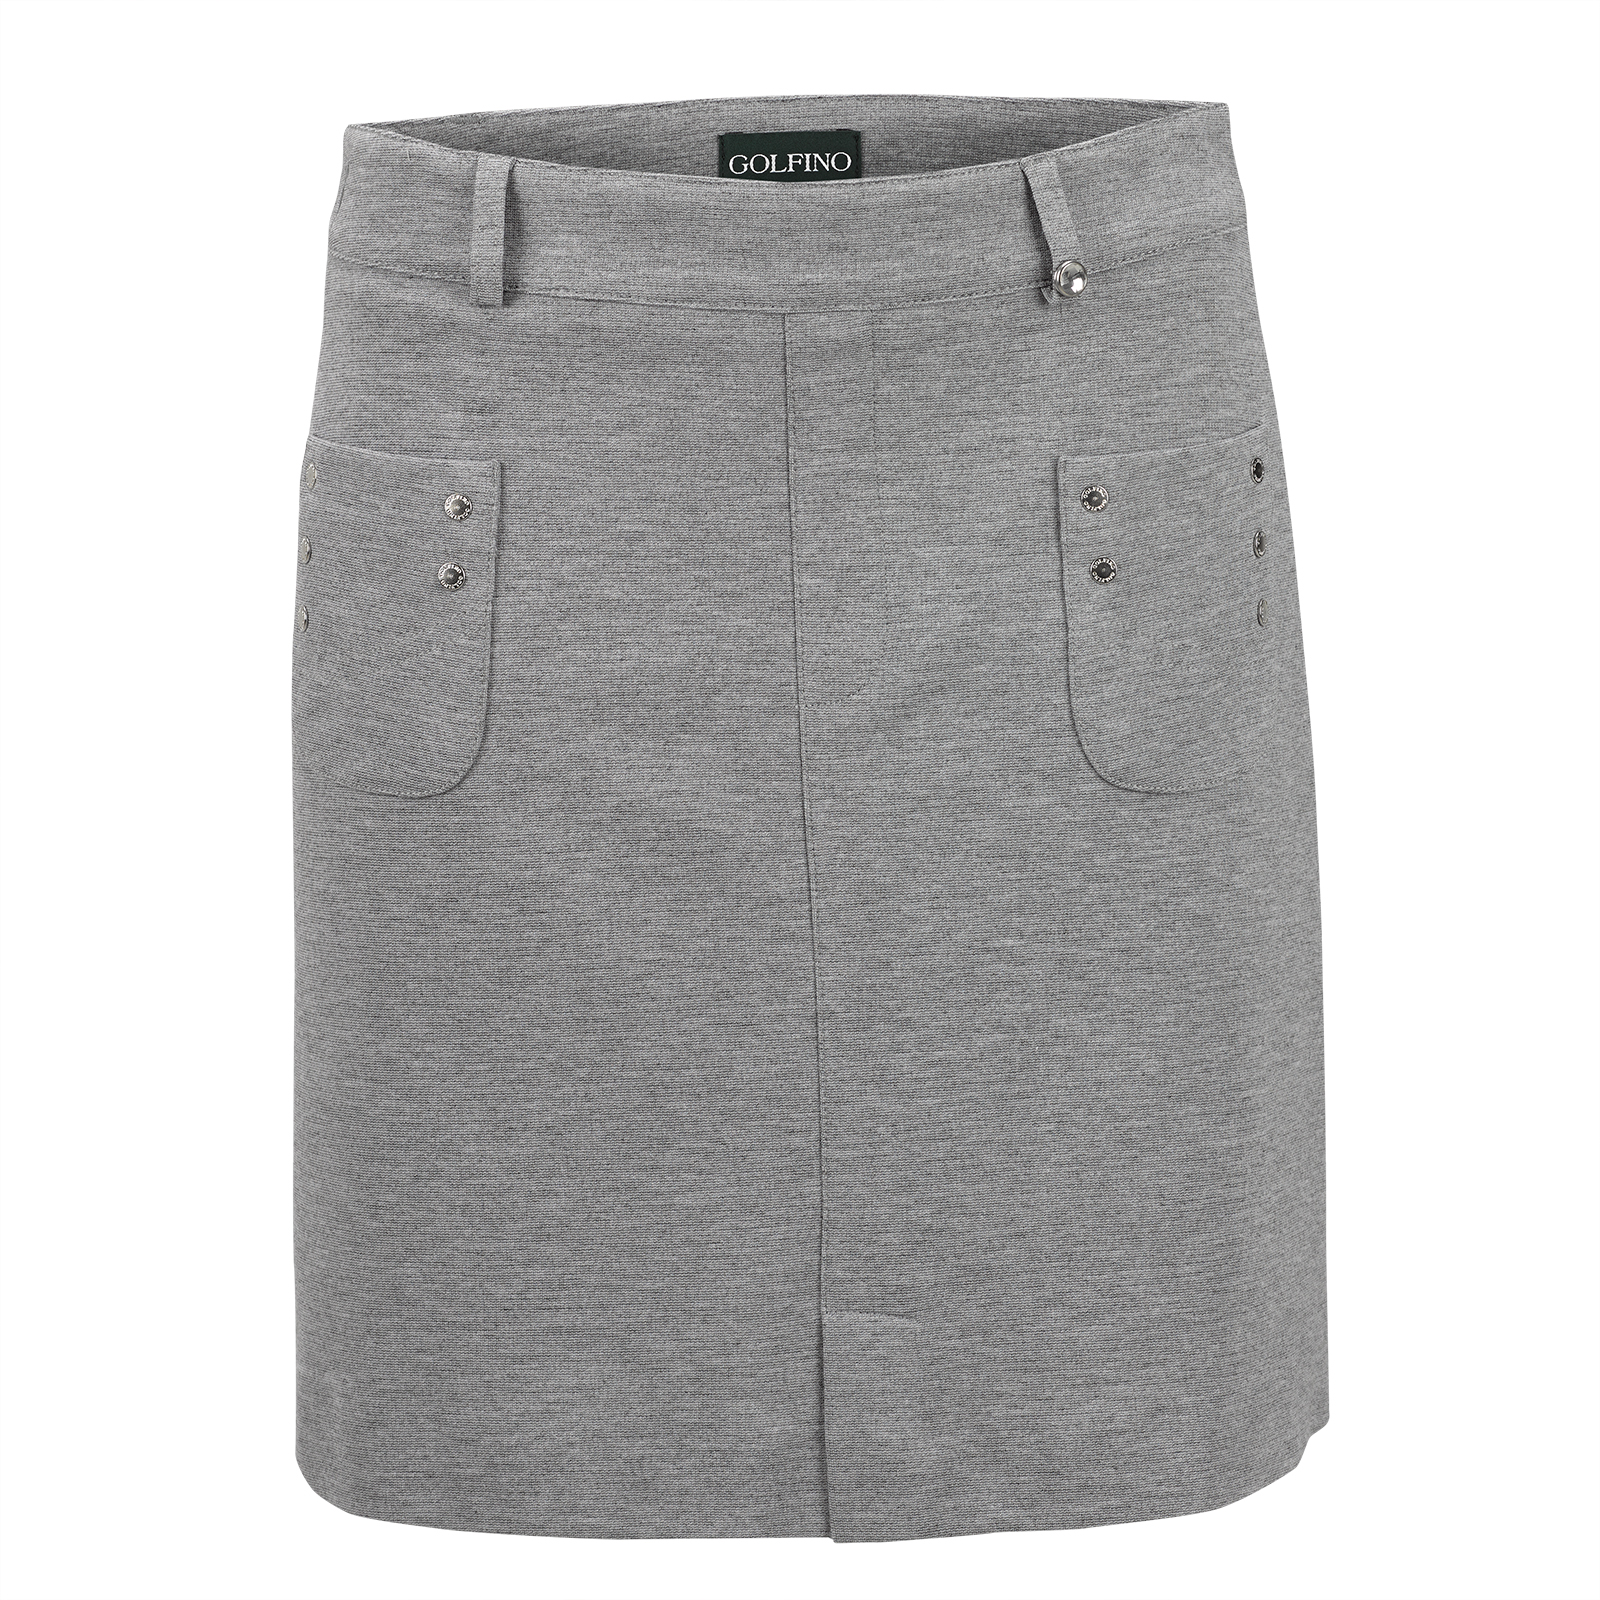 Mid-length ladies' golf skort with rivet-lined pockets